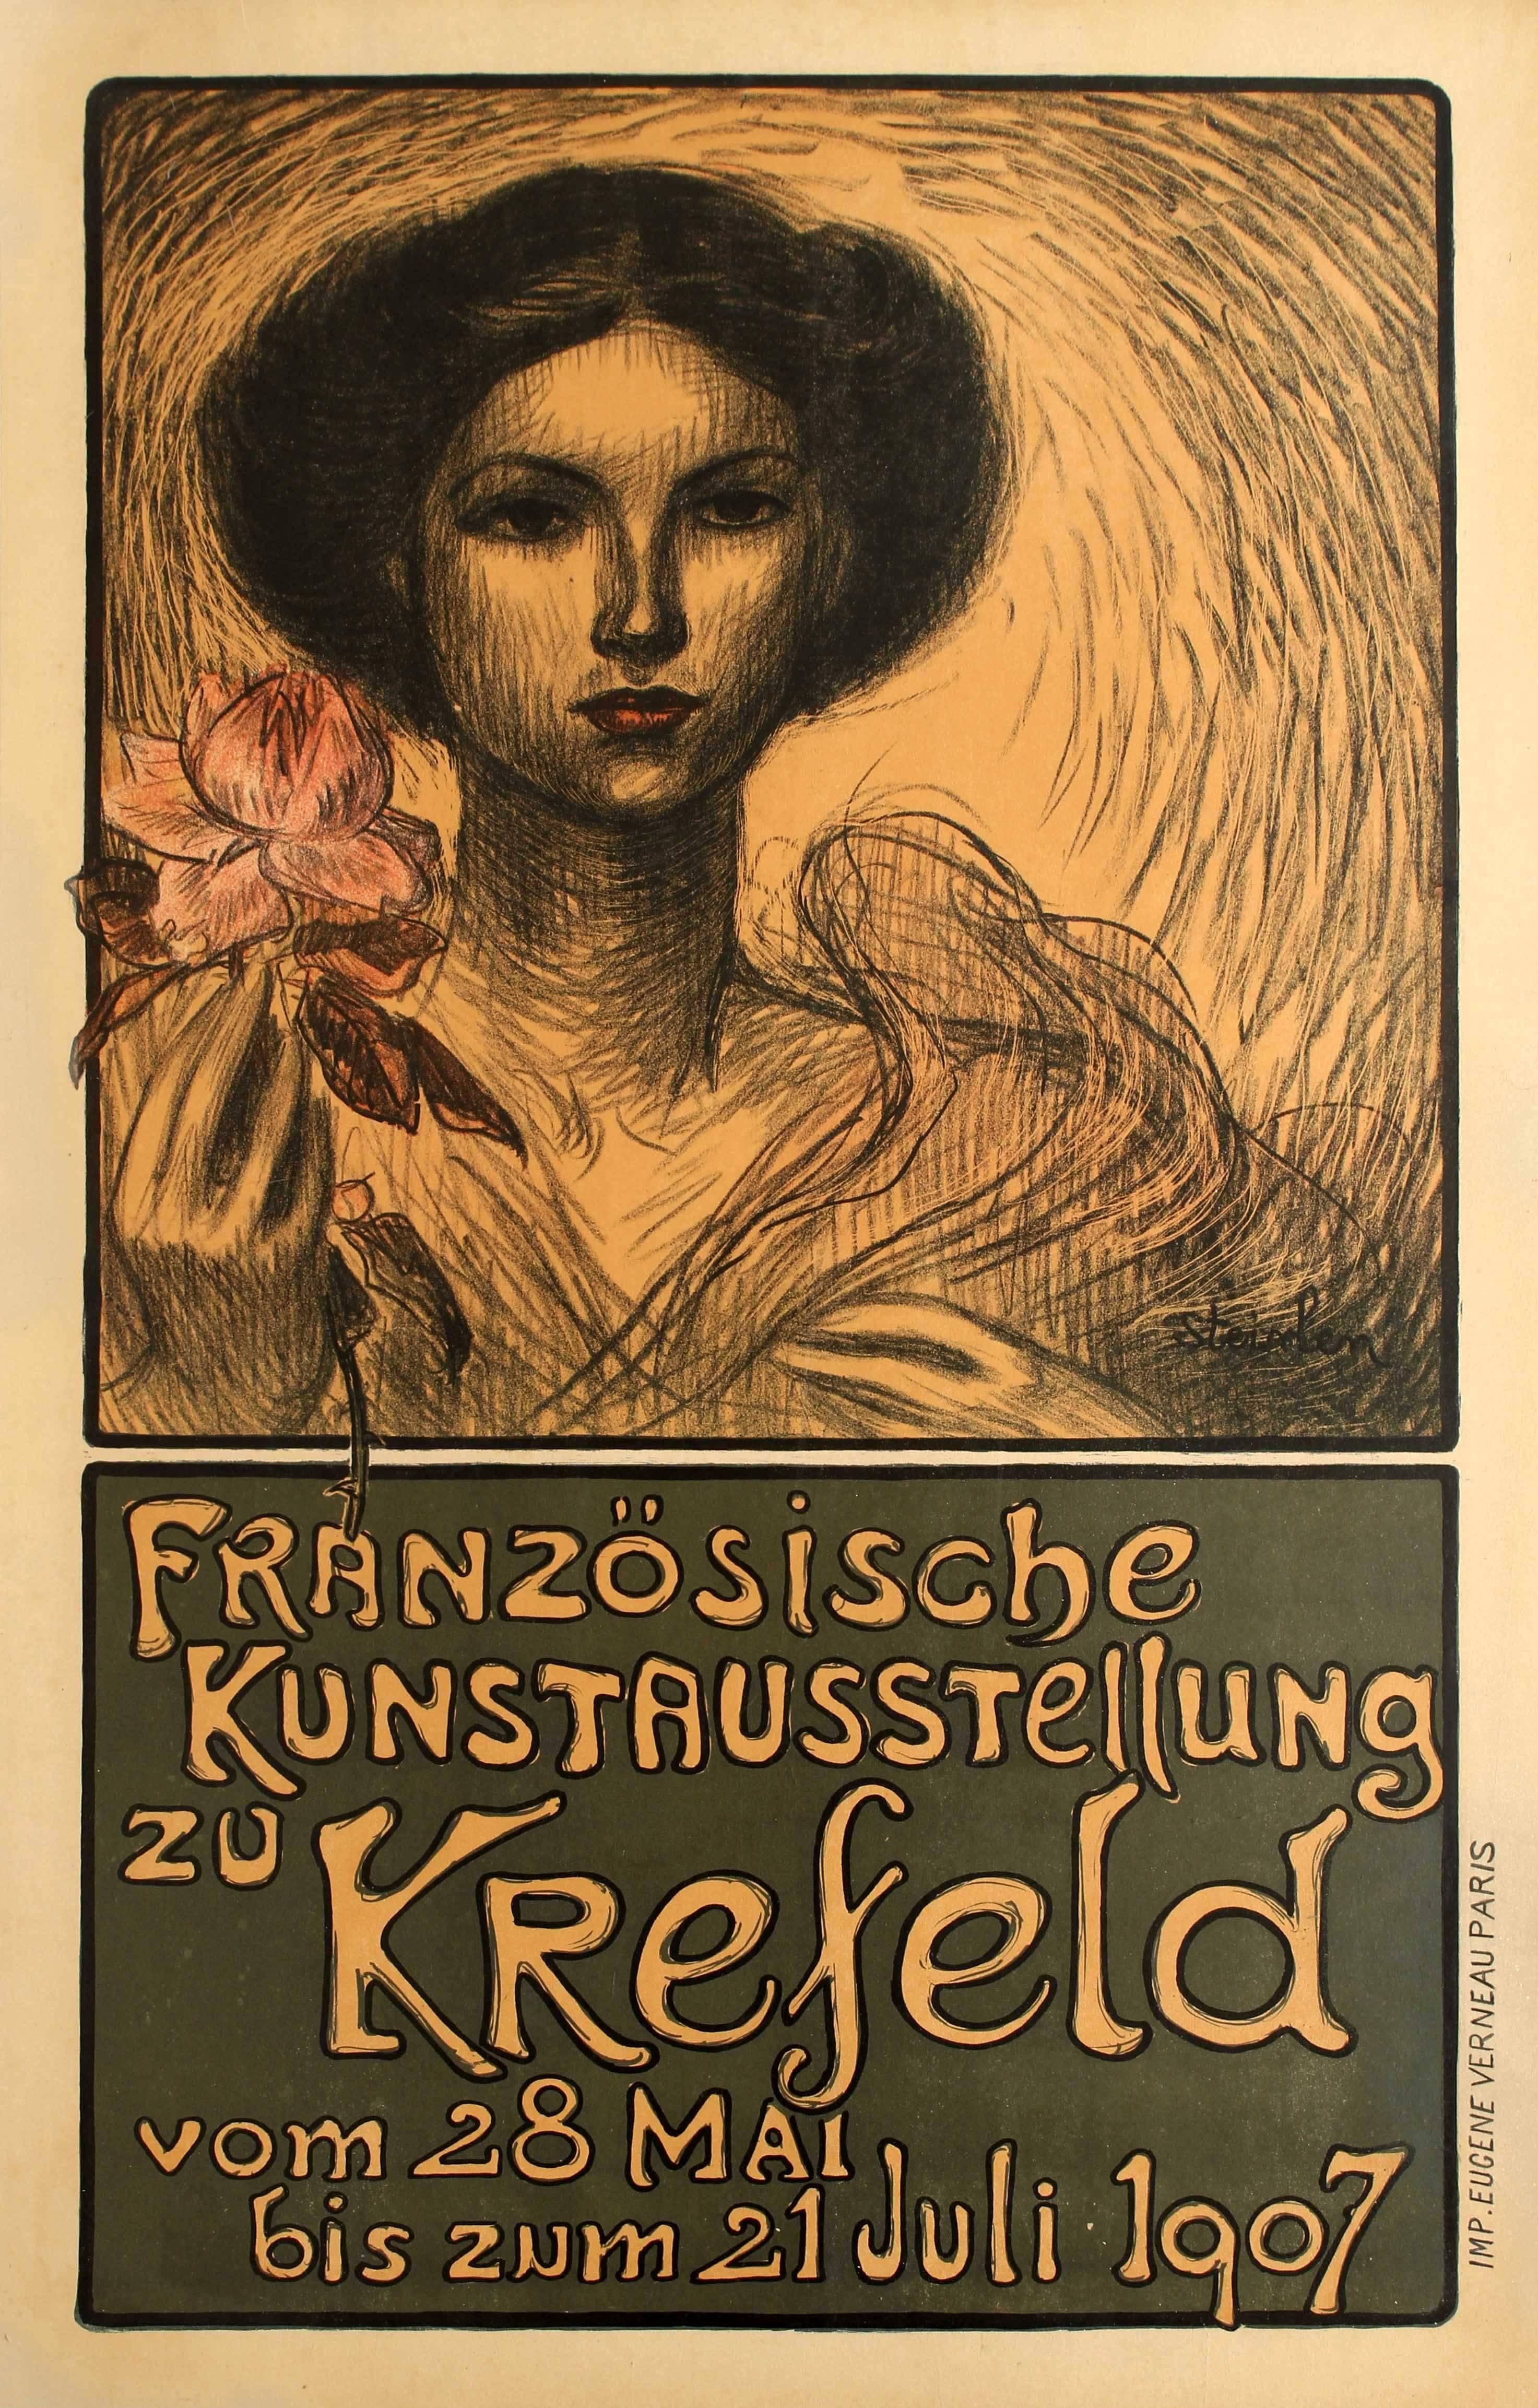 Théophile Alexandre Steinlen Print - Original Antique Art Nouveau Poster For A French Art Exhibition In Krefeld